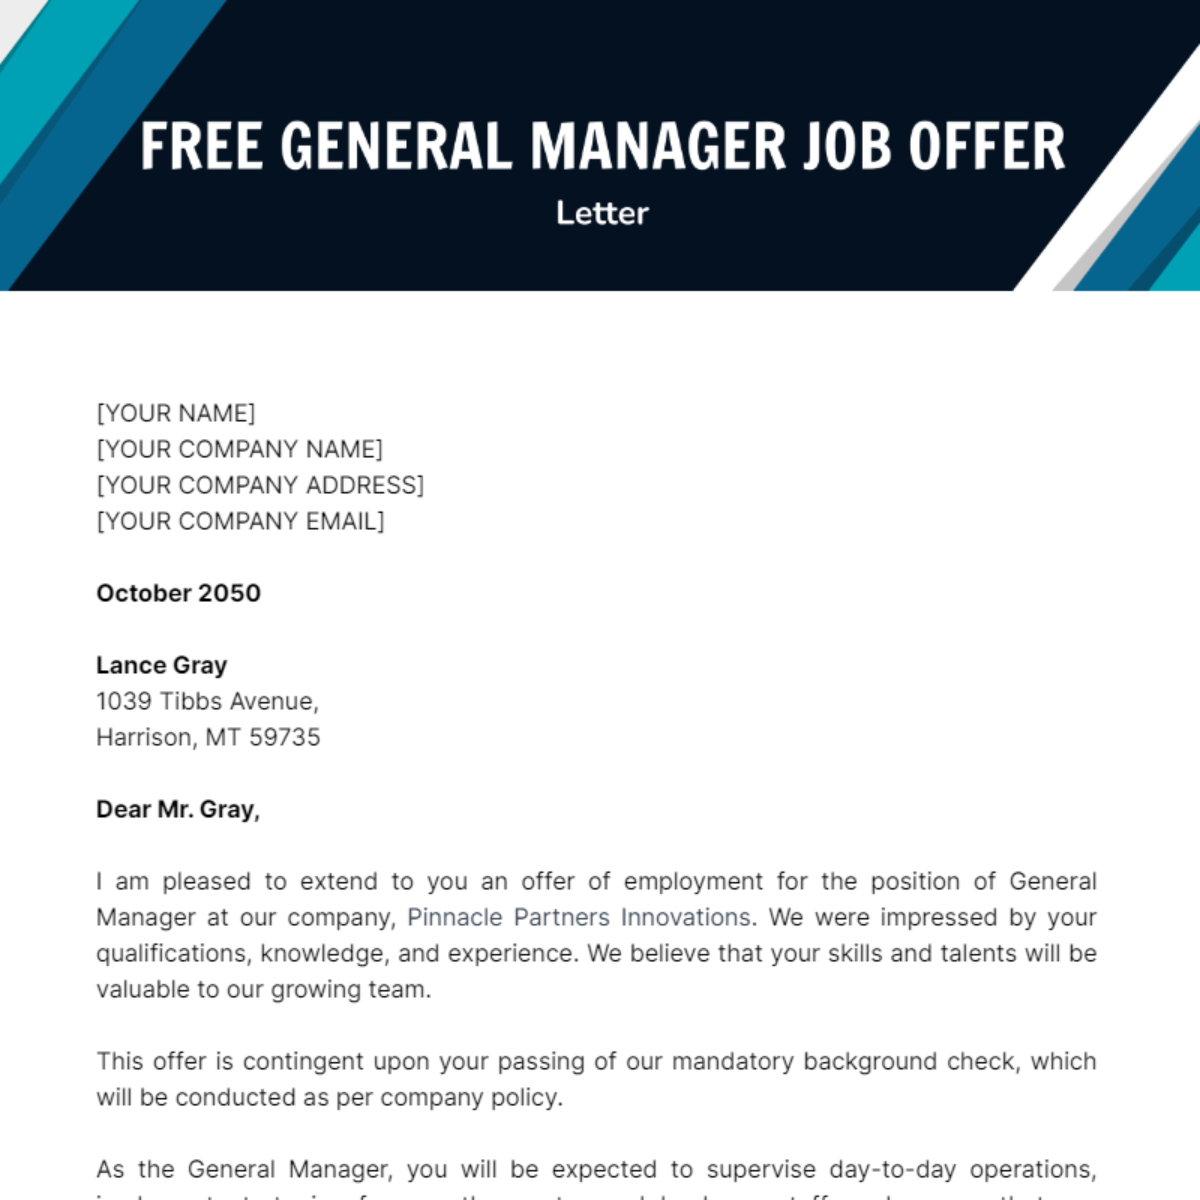 General Manager Job Offer Letter Template